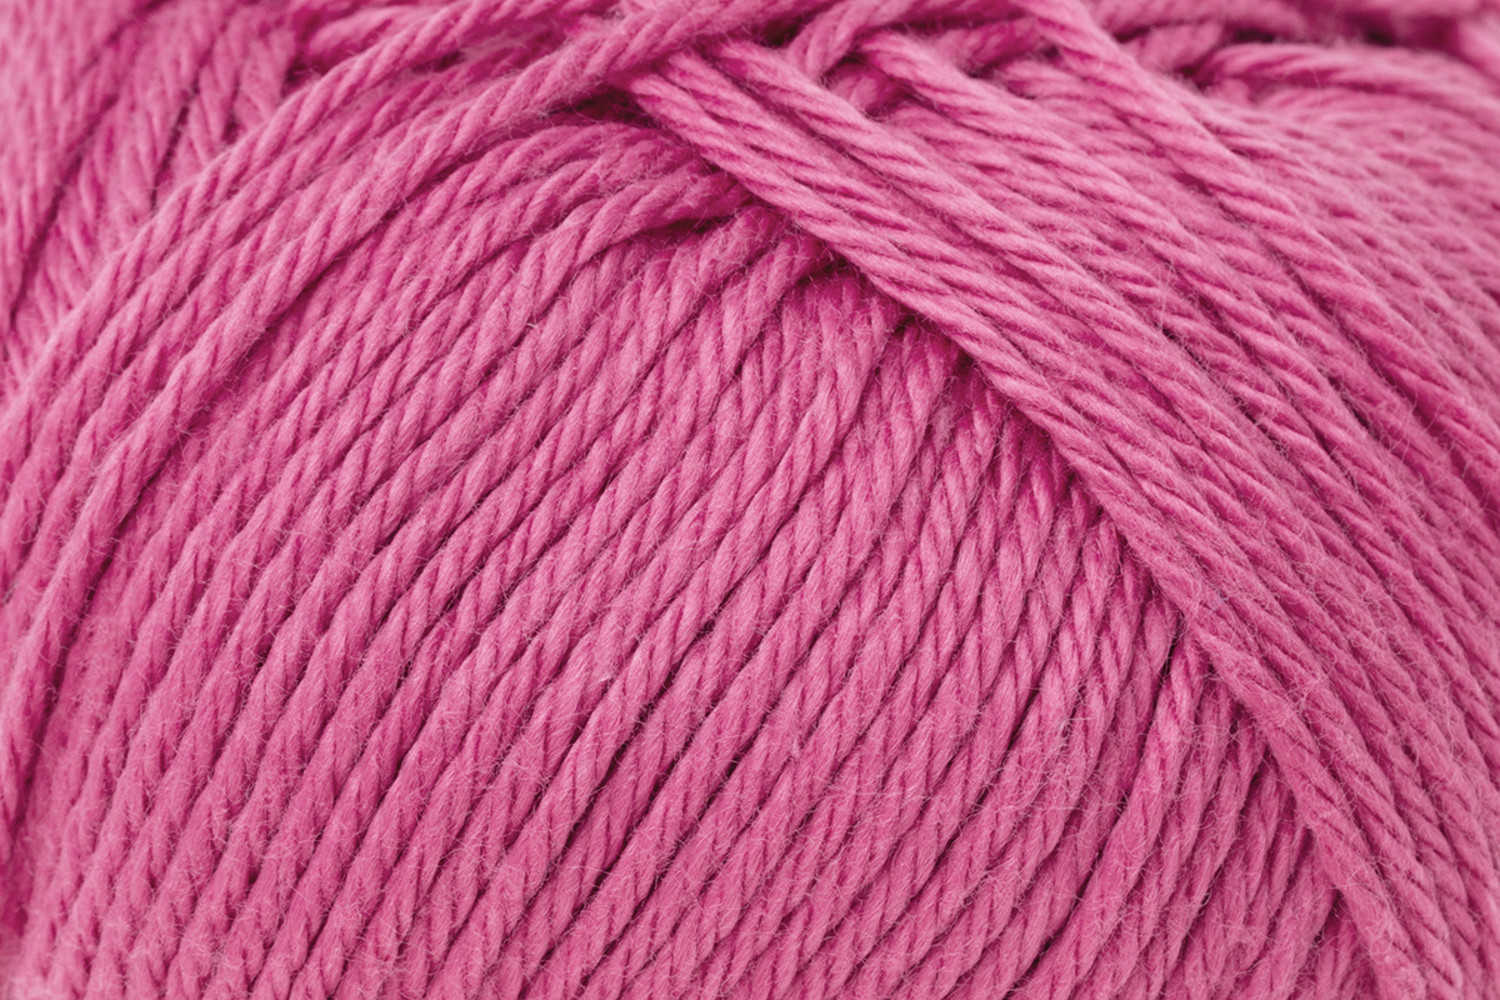 Rowan Summerlite 4 Ply - Pinched Pink (426)